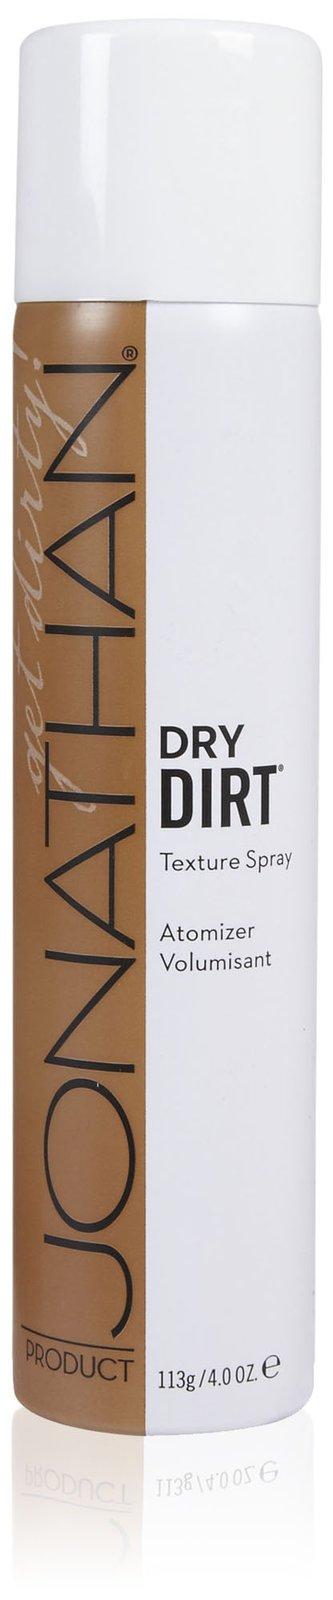 Jonathan Product Dry Dirt Texture Spray